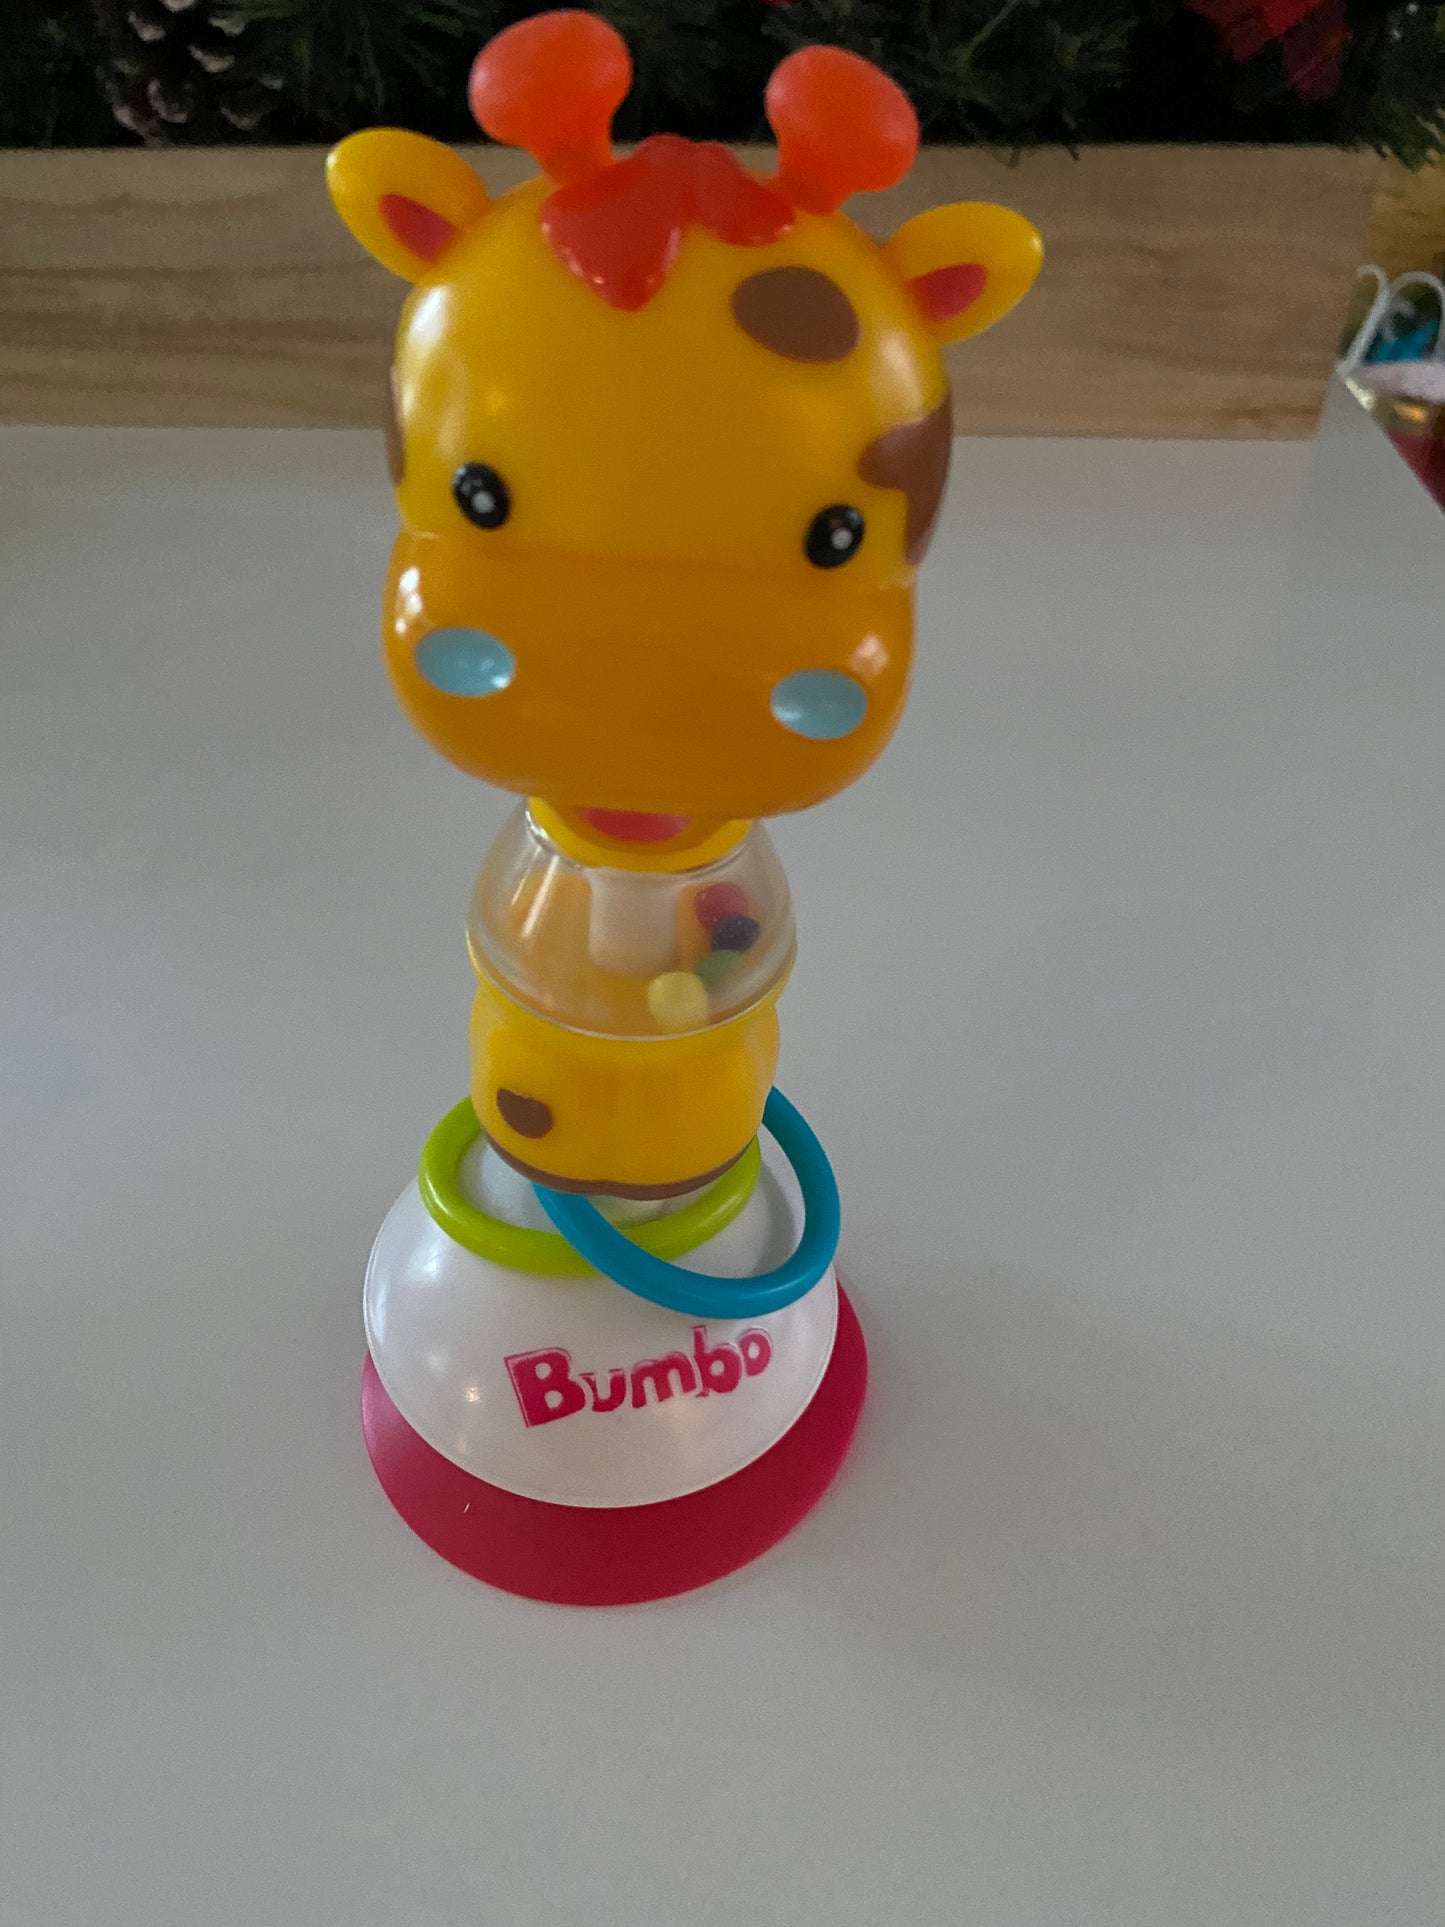 Bumbo Giraffe suction toy